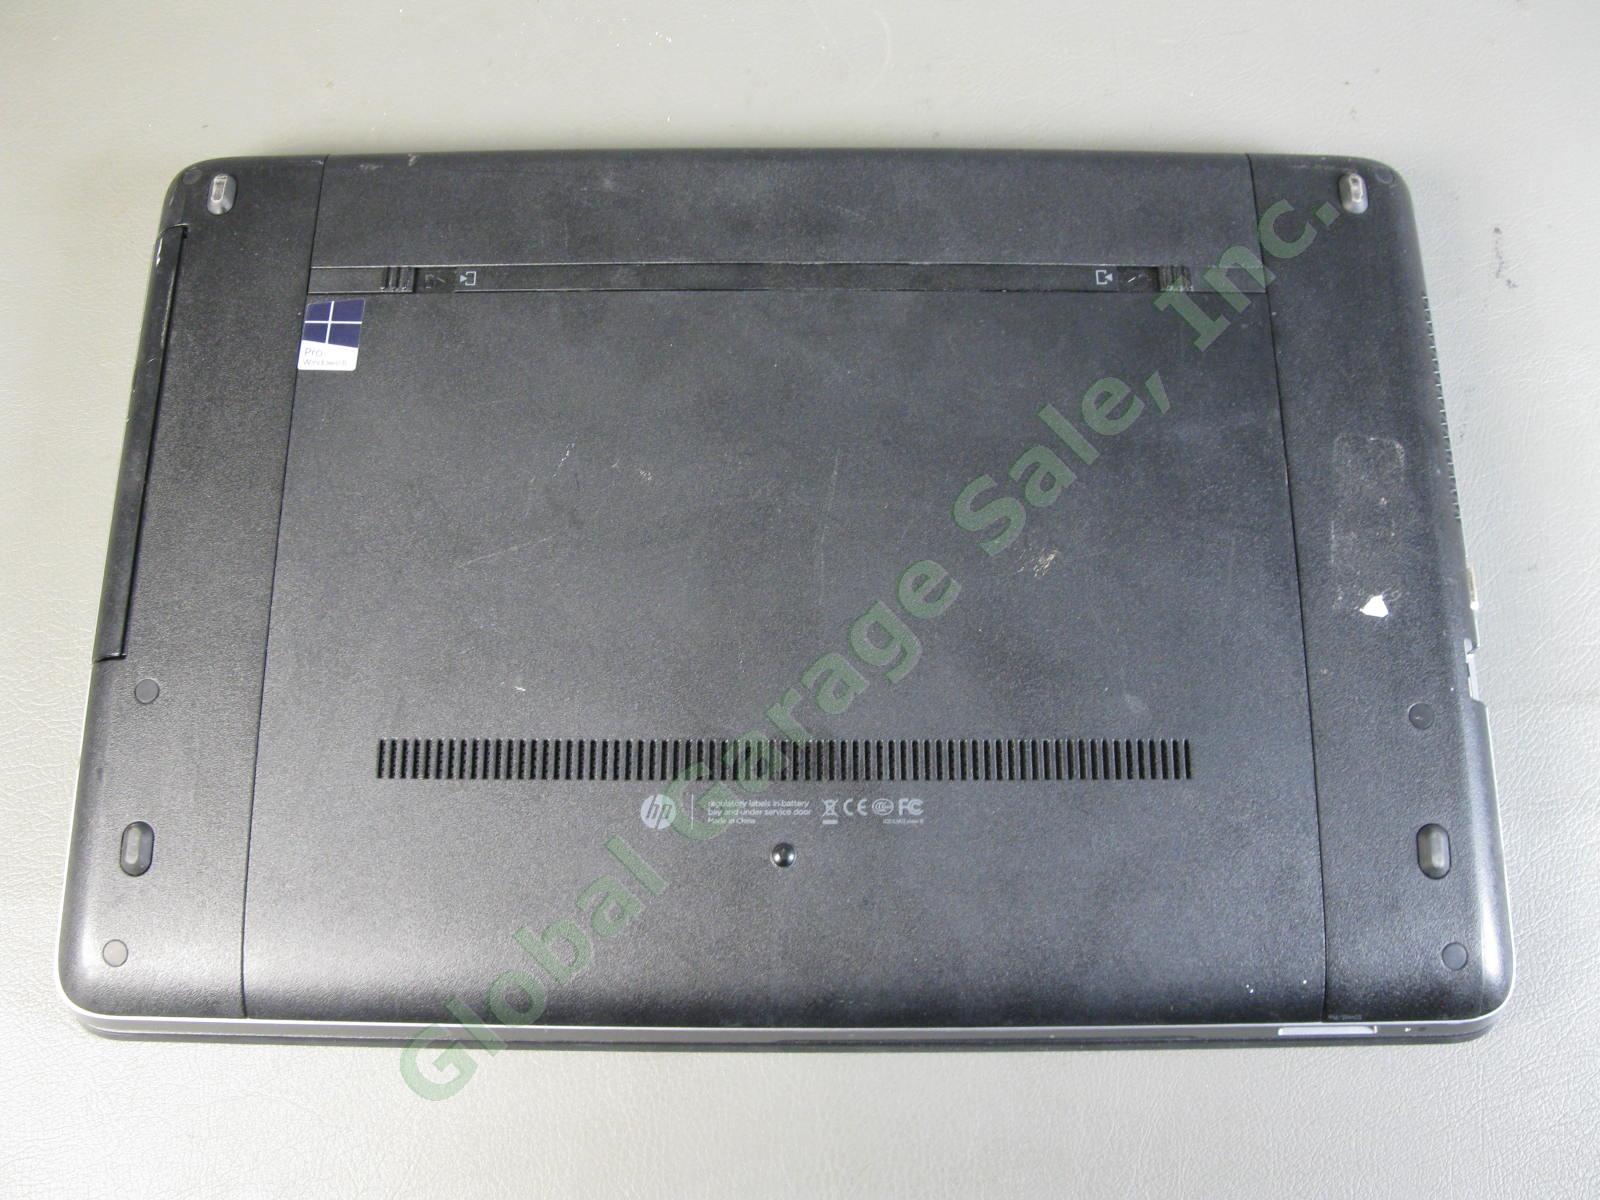 HP ProBook 450 G1 Laptop Computer i5-4200M 4GB 500GB Win10 WIFI DVD Webcam Power 7